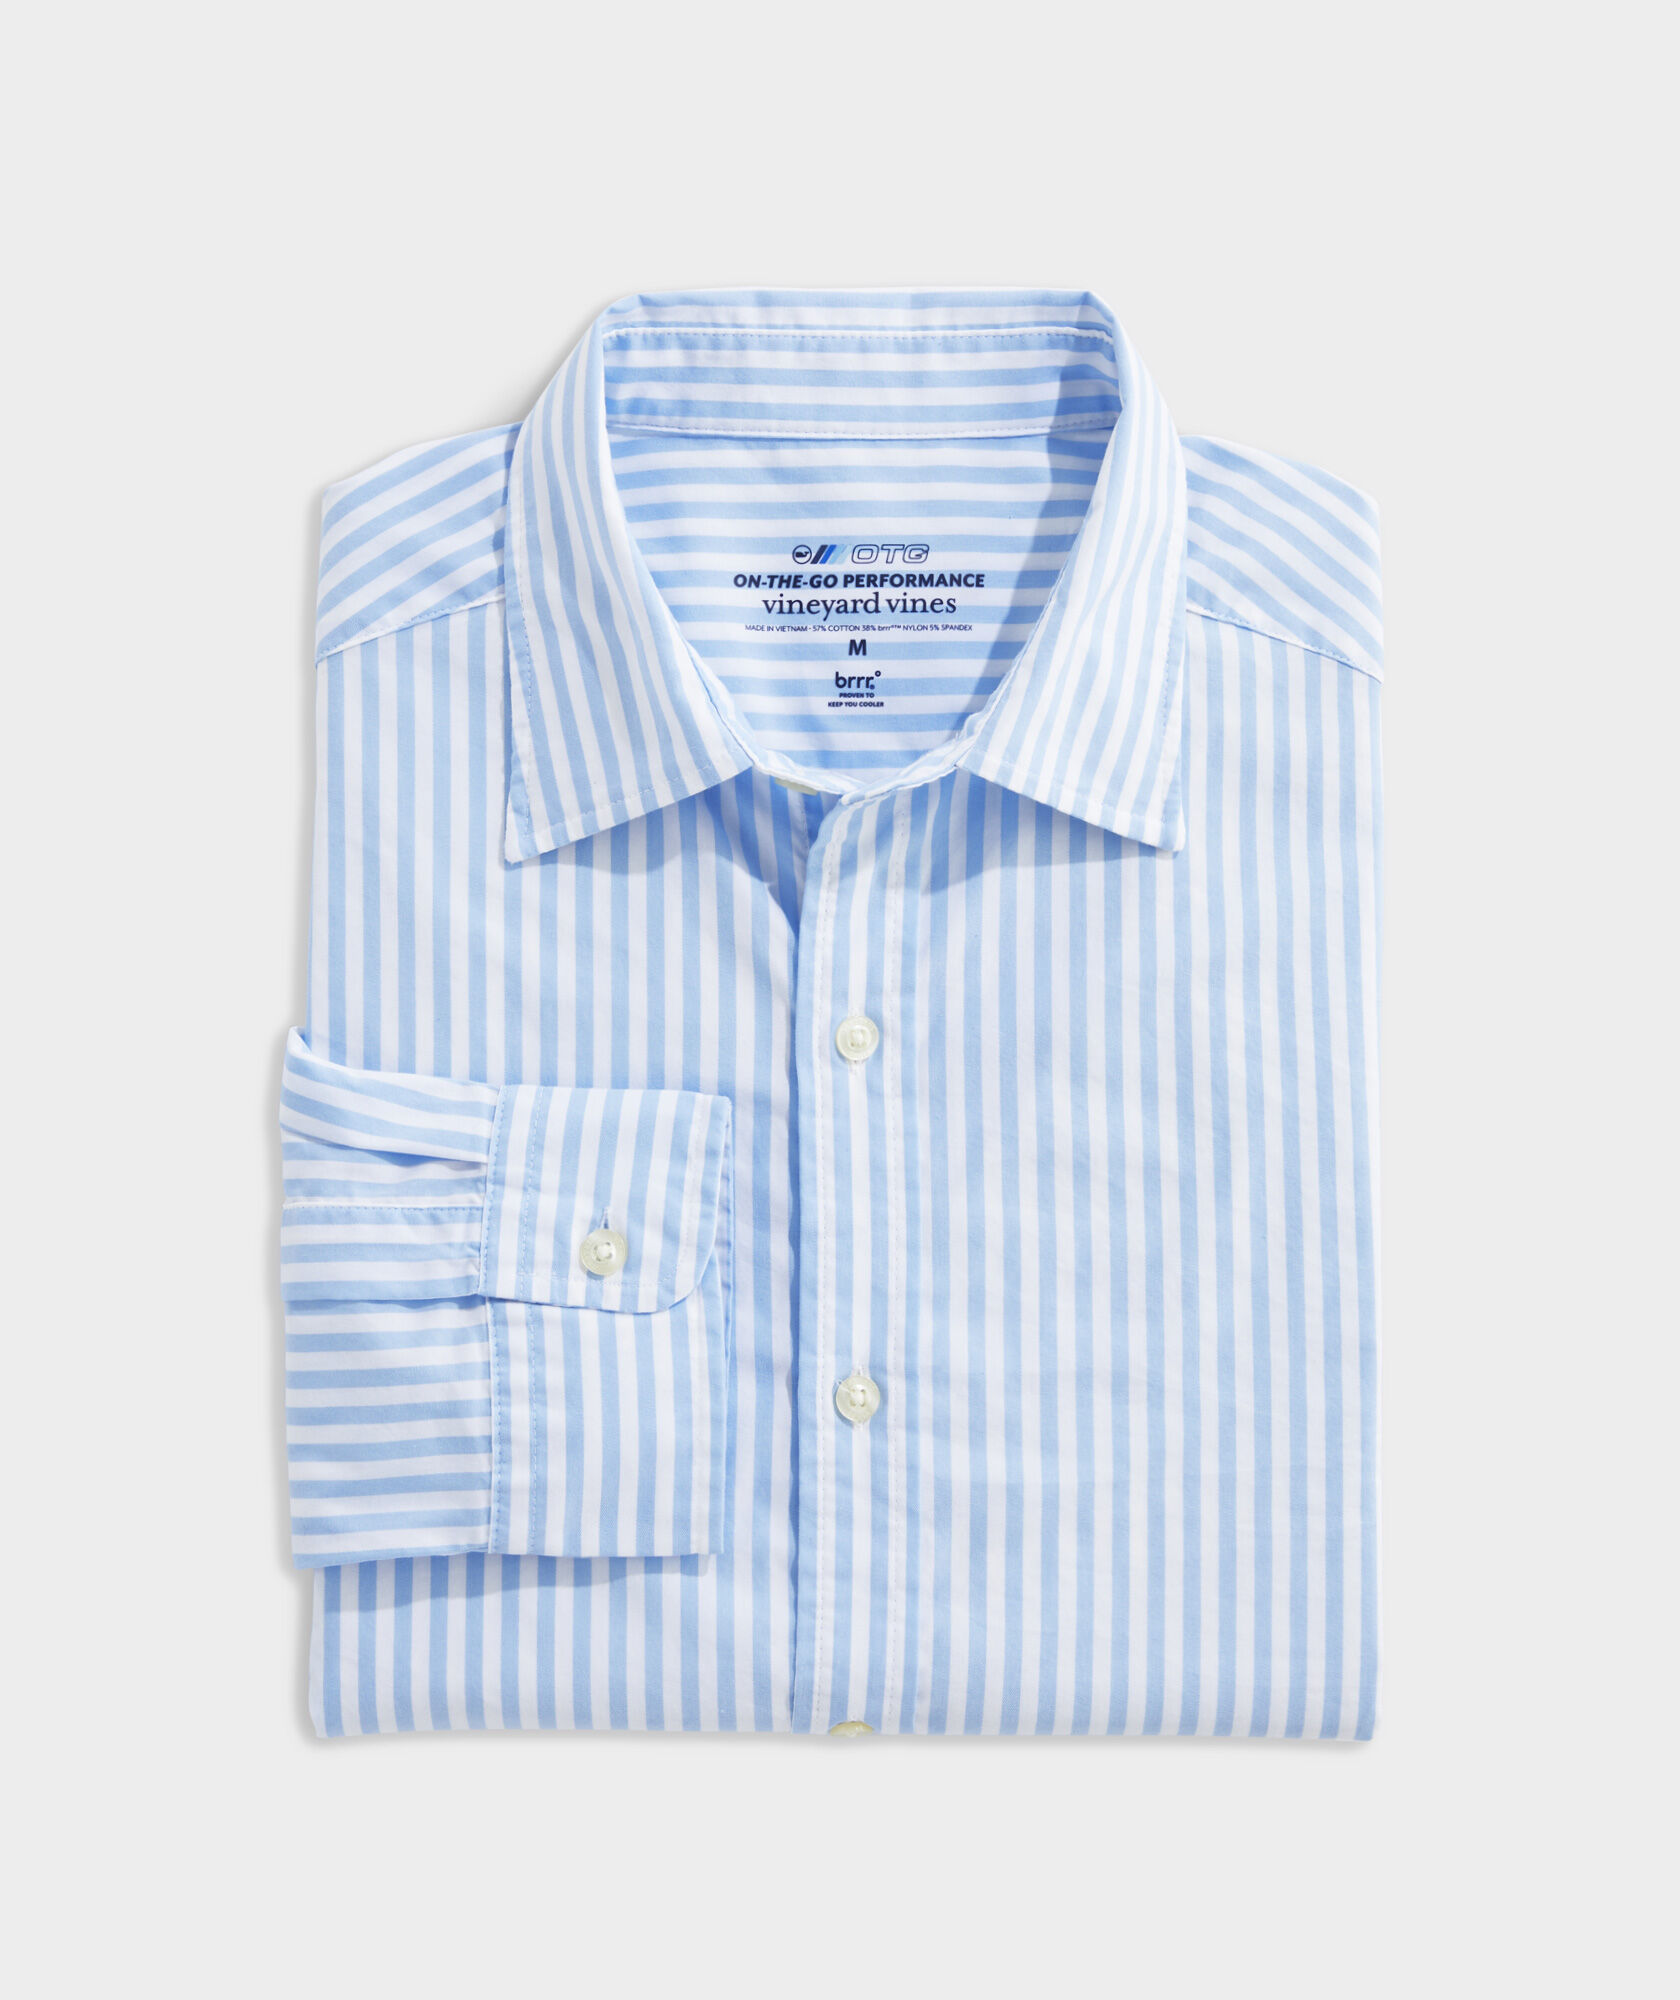 Shop On-The-Go brrrº Spread Collar Stripe Shirt at vineyard vines